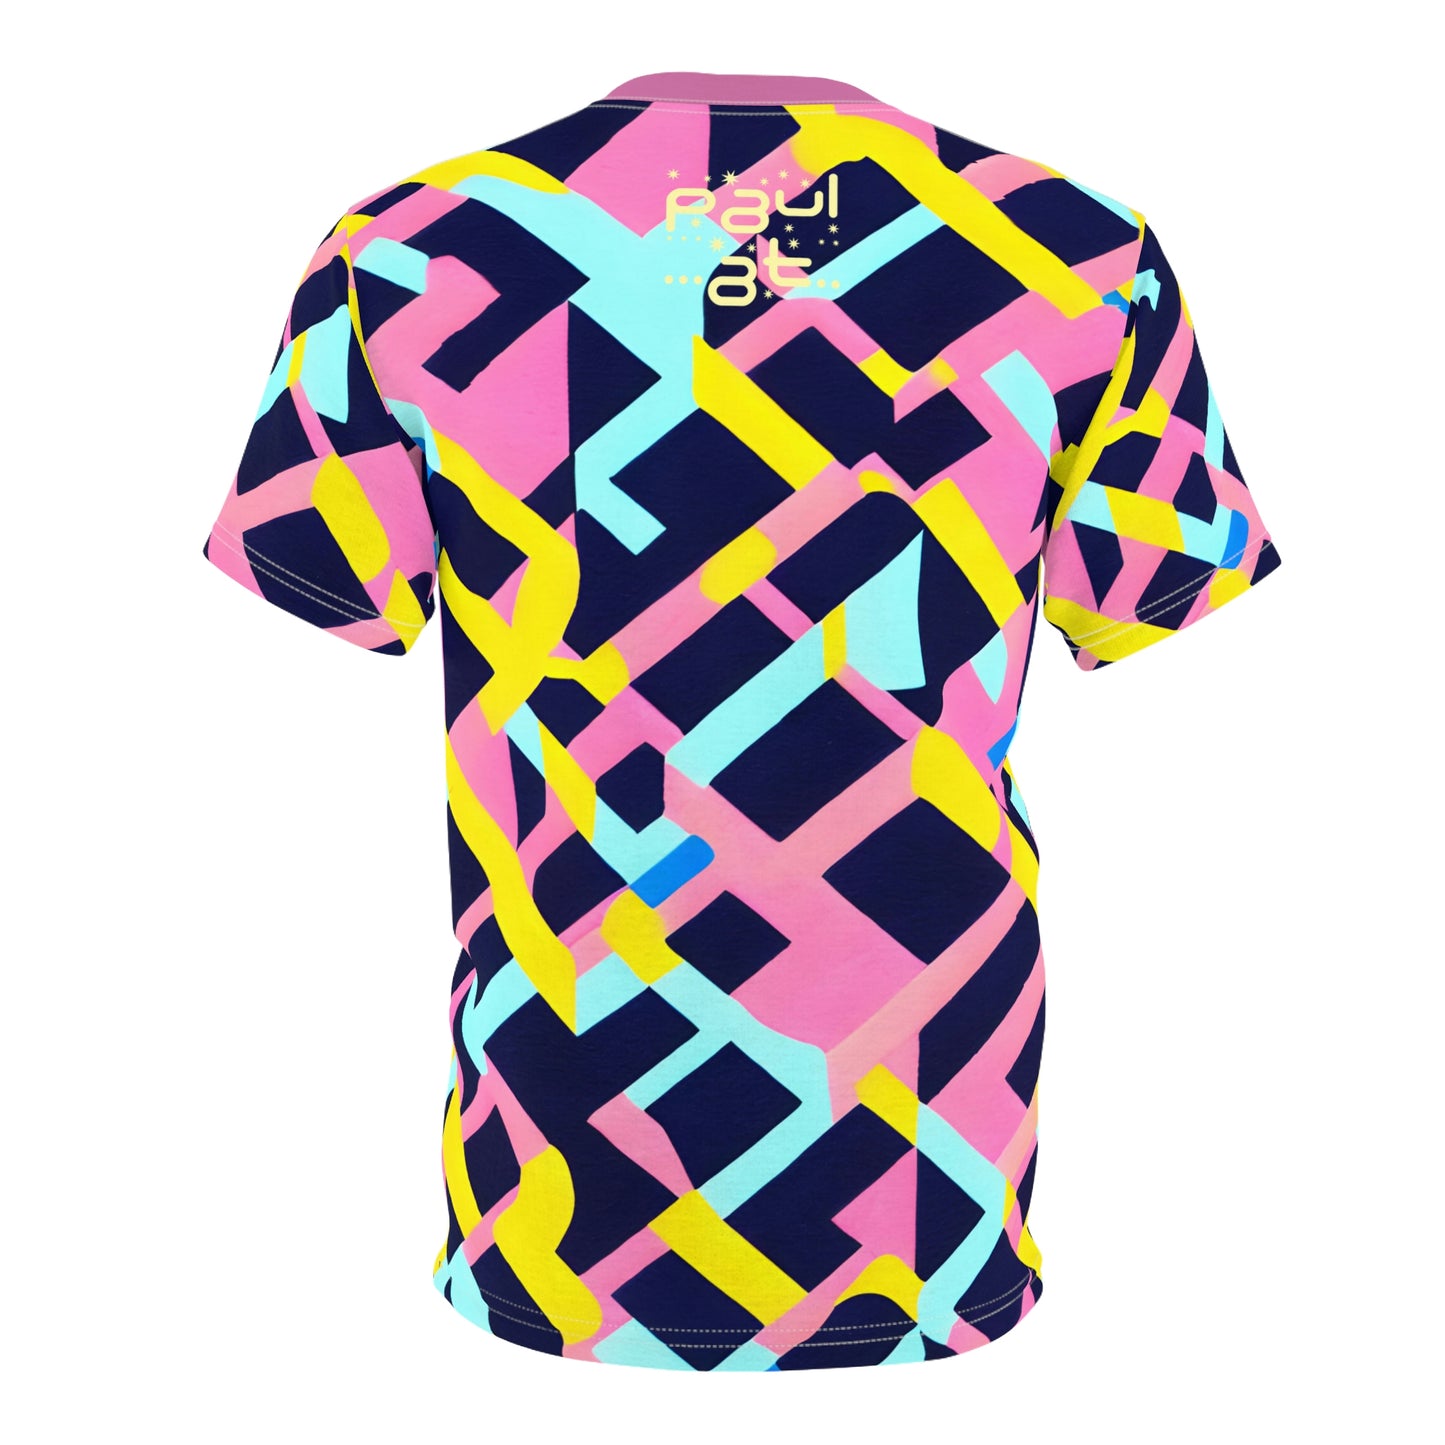 Geometric Memphis 3 Unisex T-Shirt